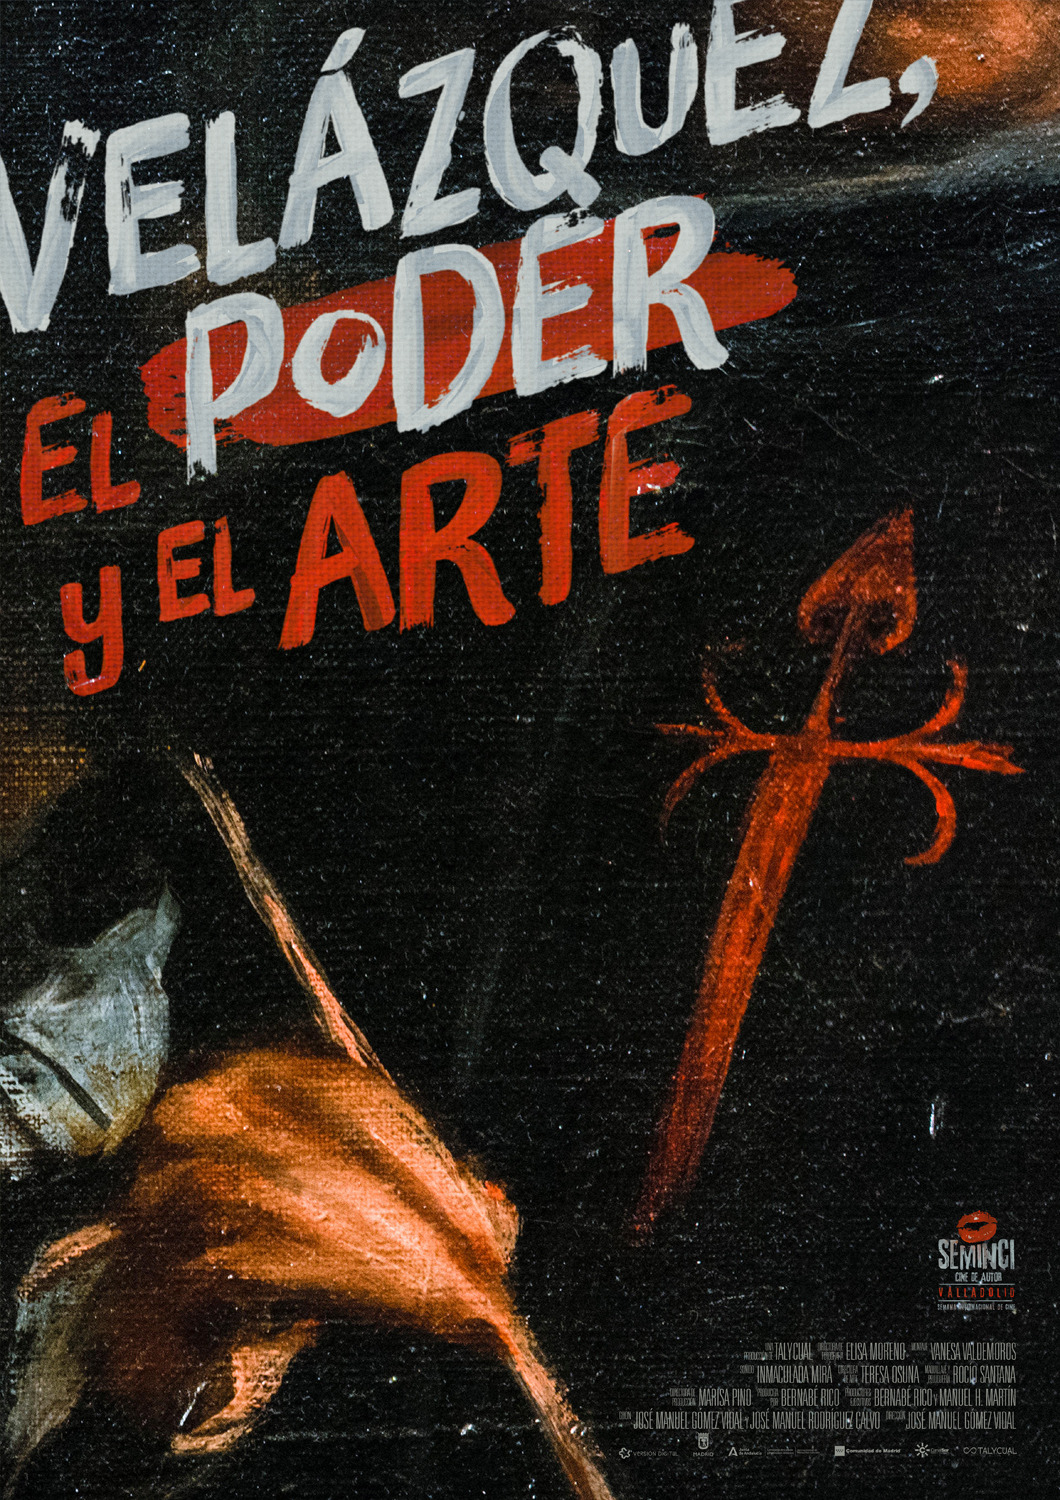 Extra Large Movie Poster Image for Velázquez, el poder y el arte  